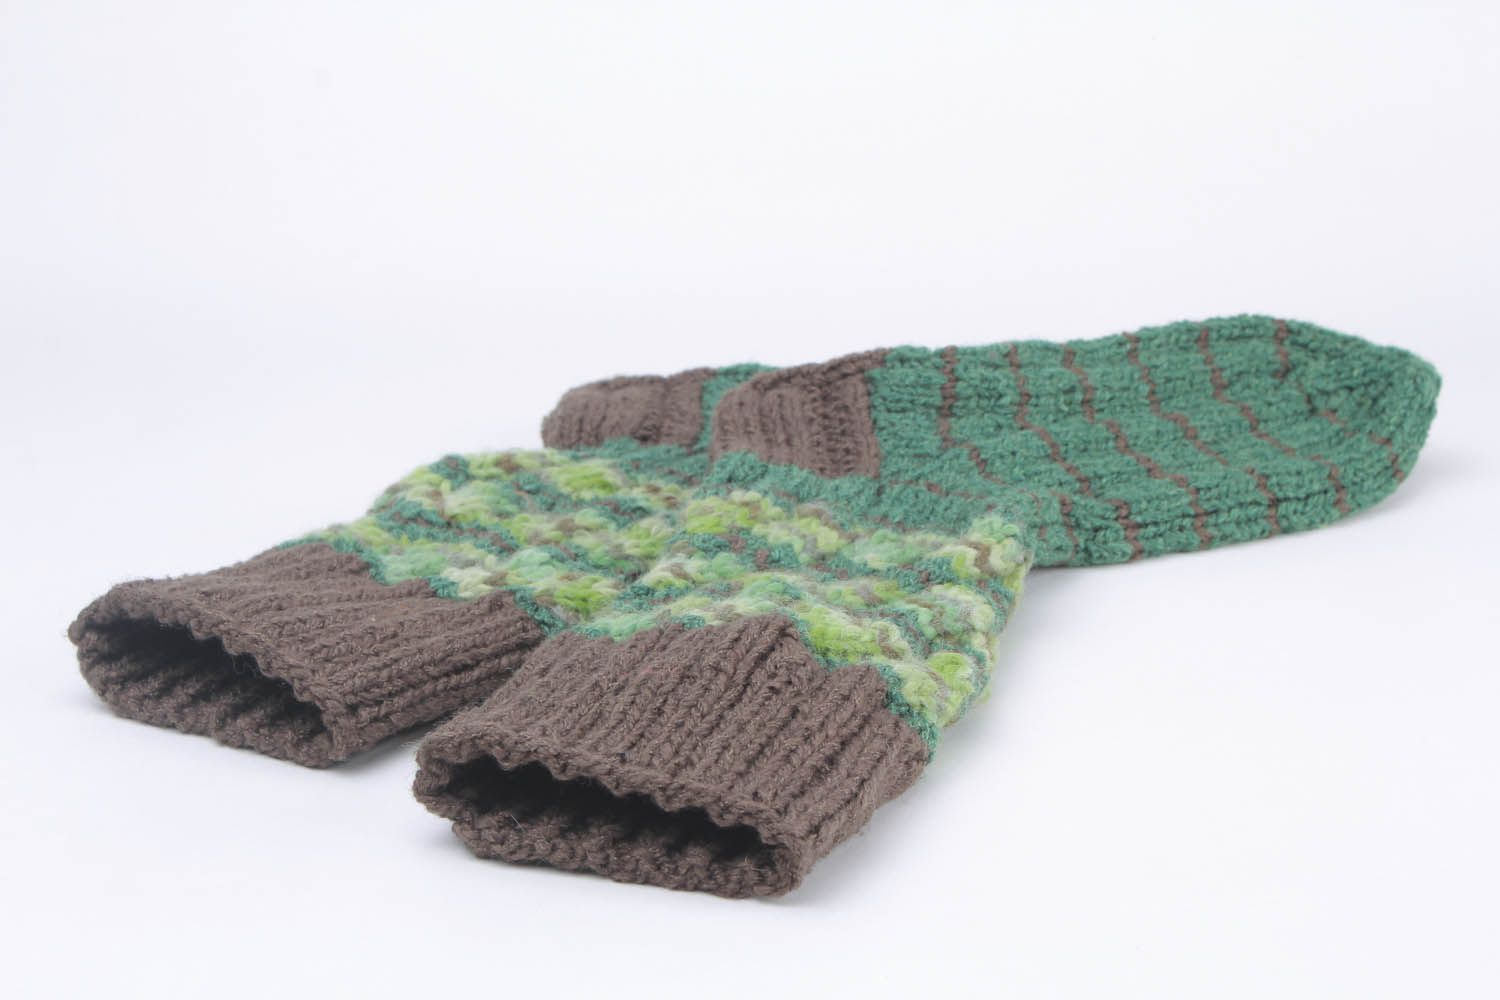 Knitted wool socks photo 4